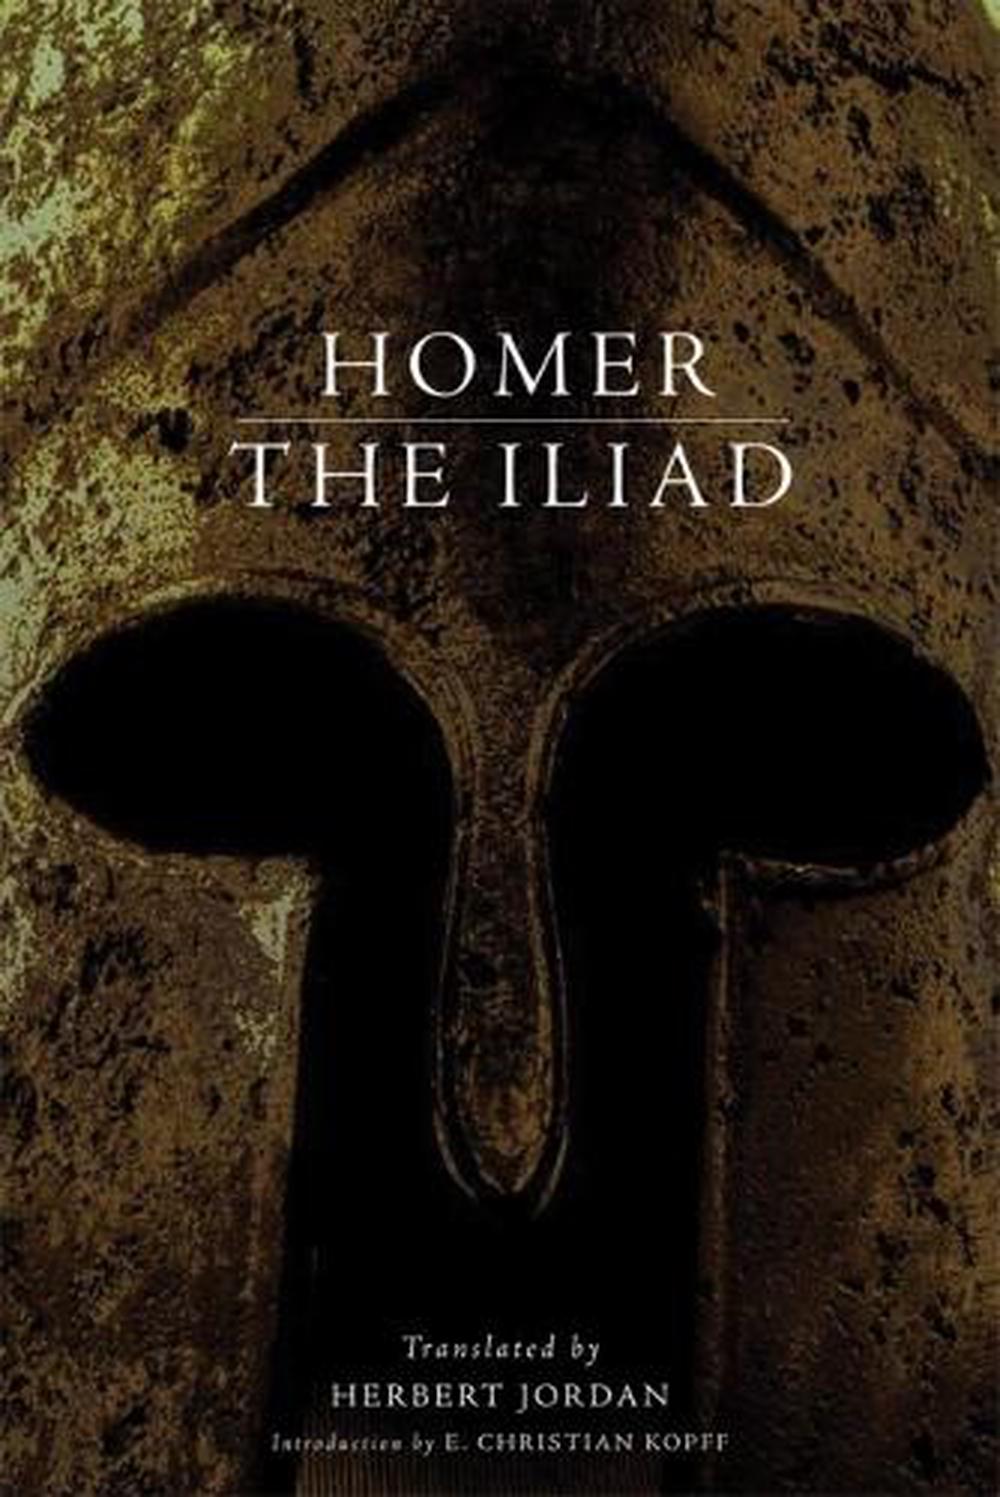 homers the illiad